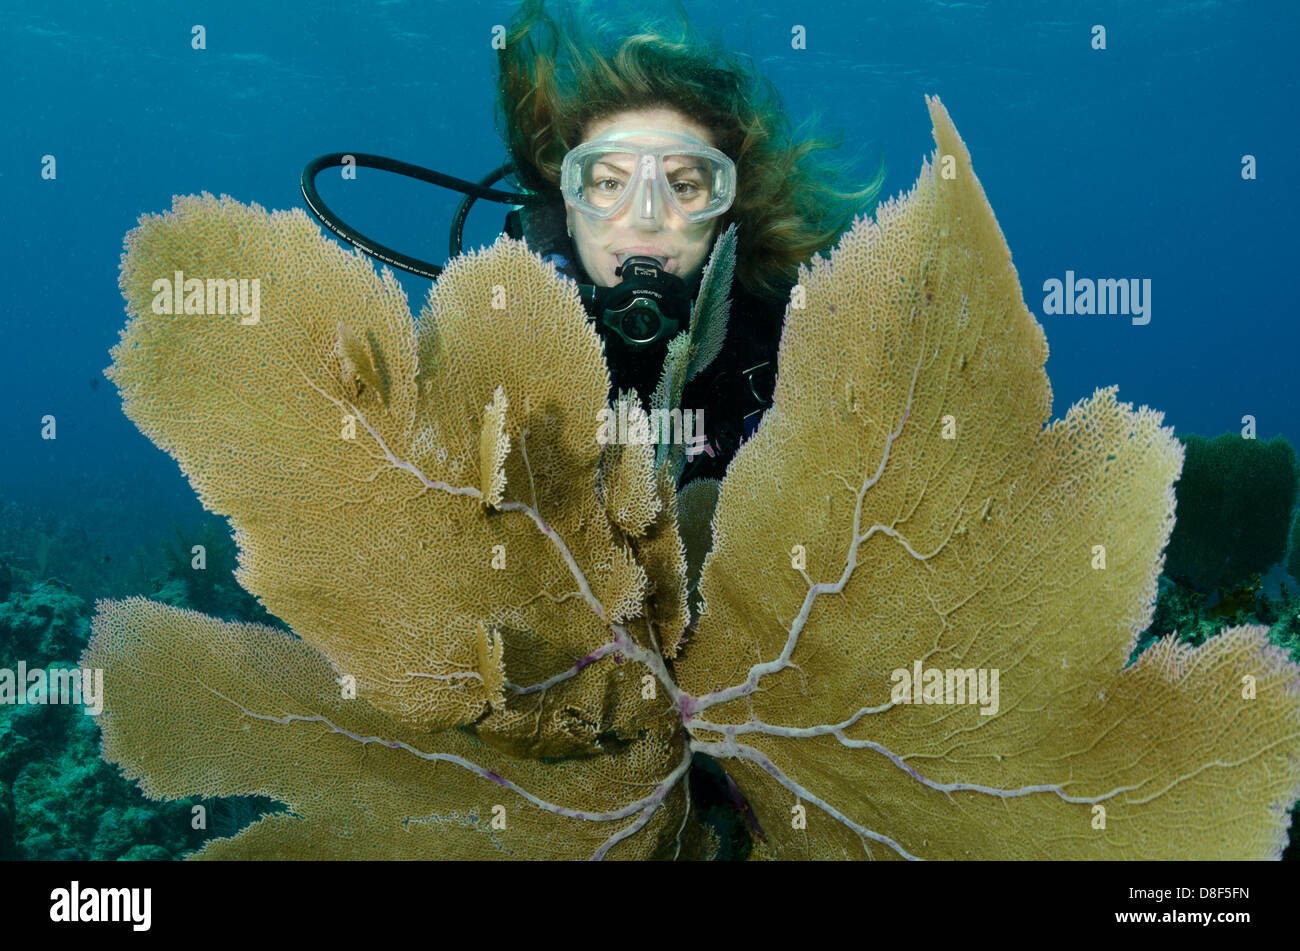 A female scuba diver poses next to a sea fan Stock Photo